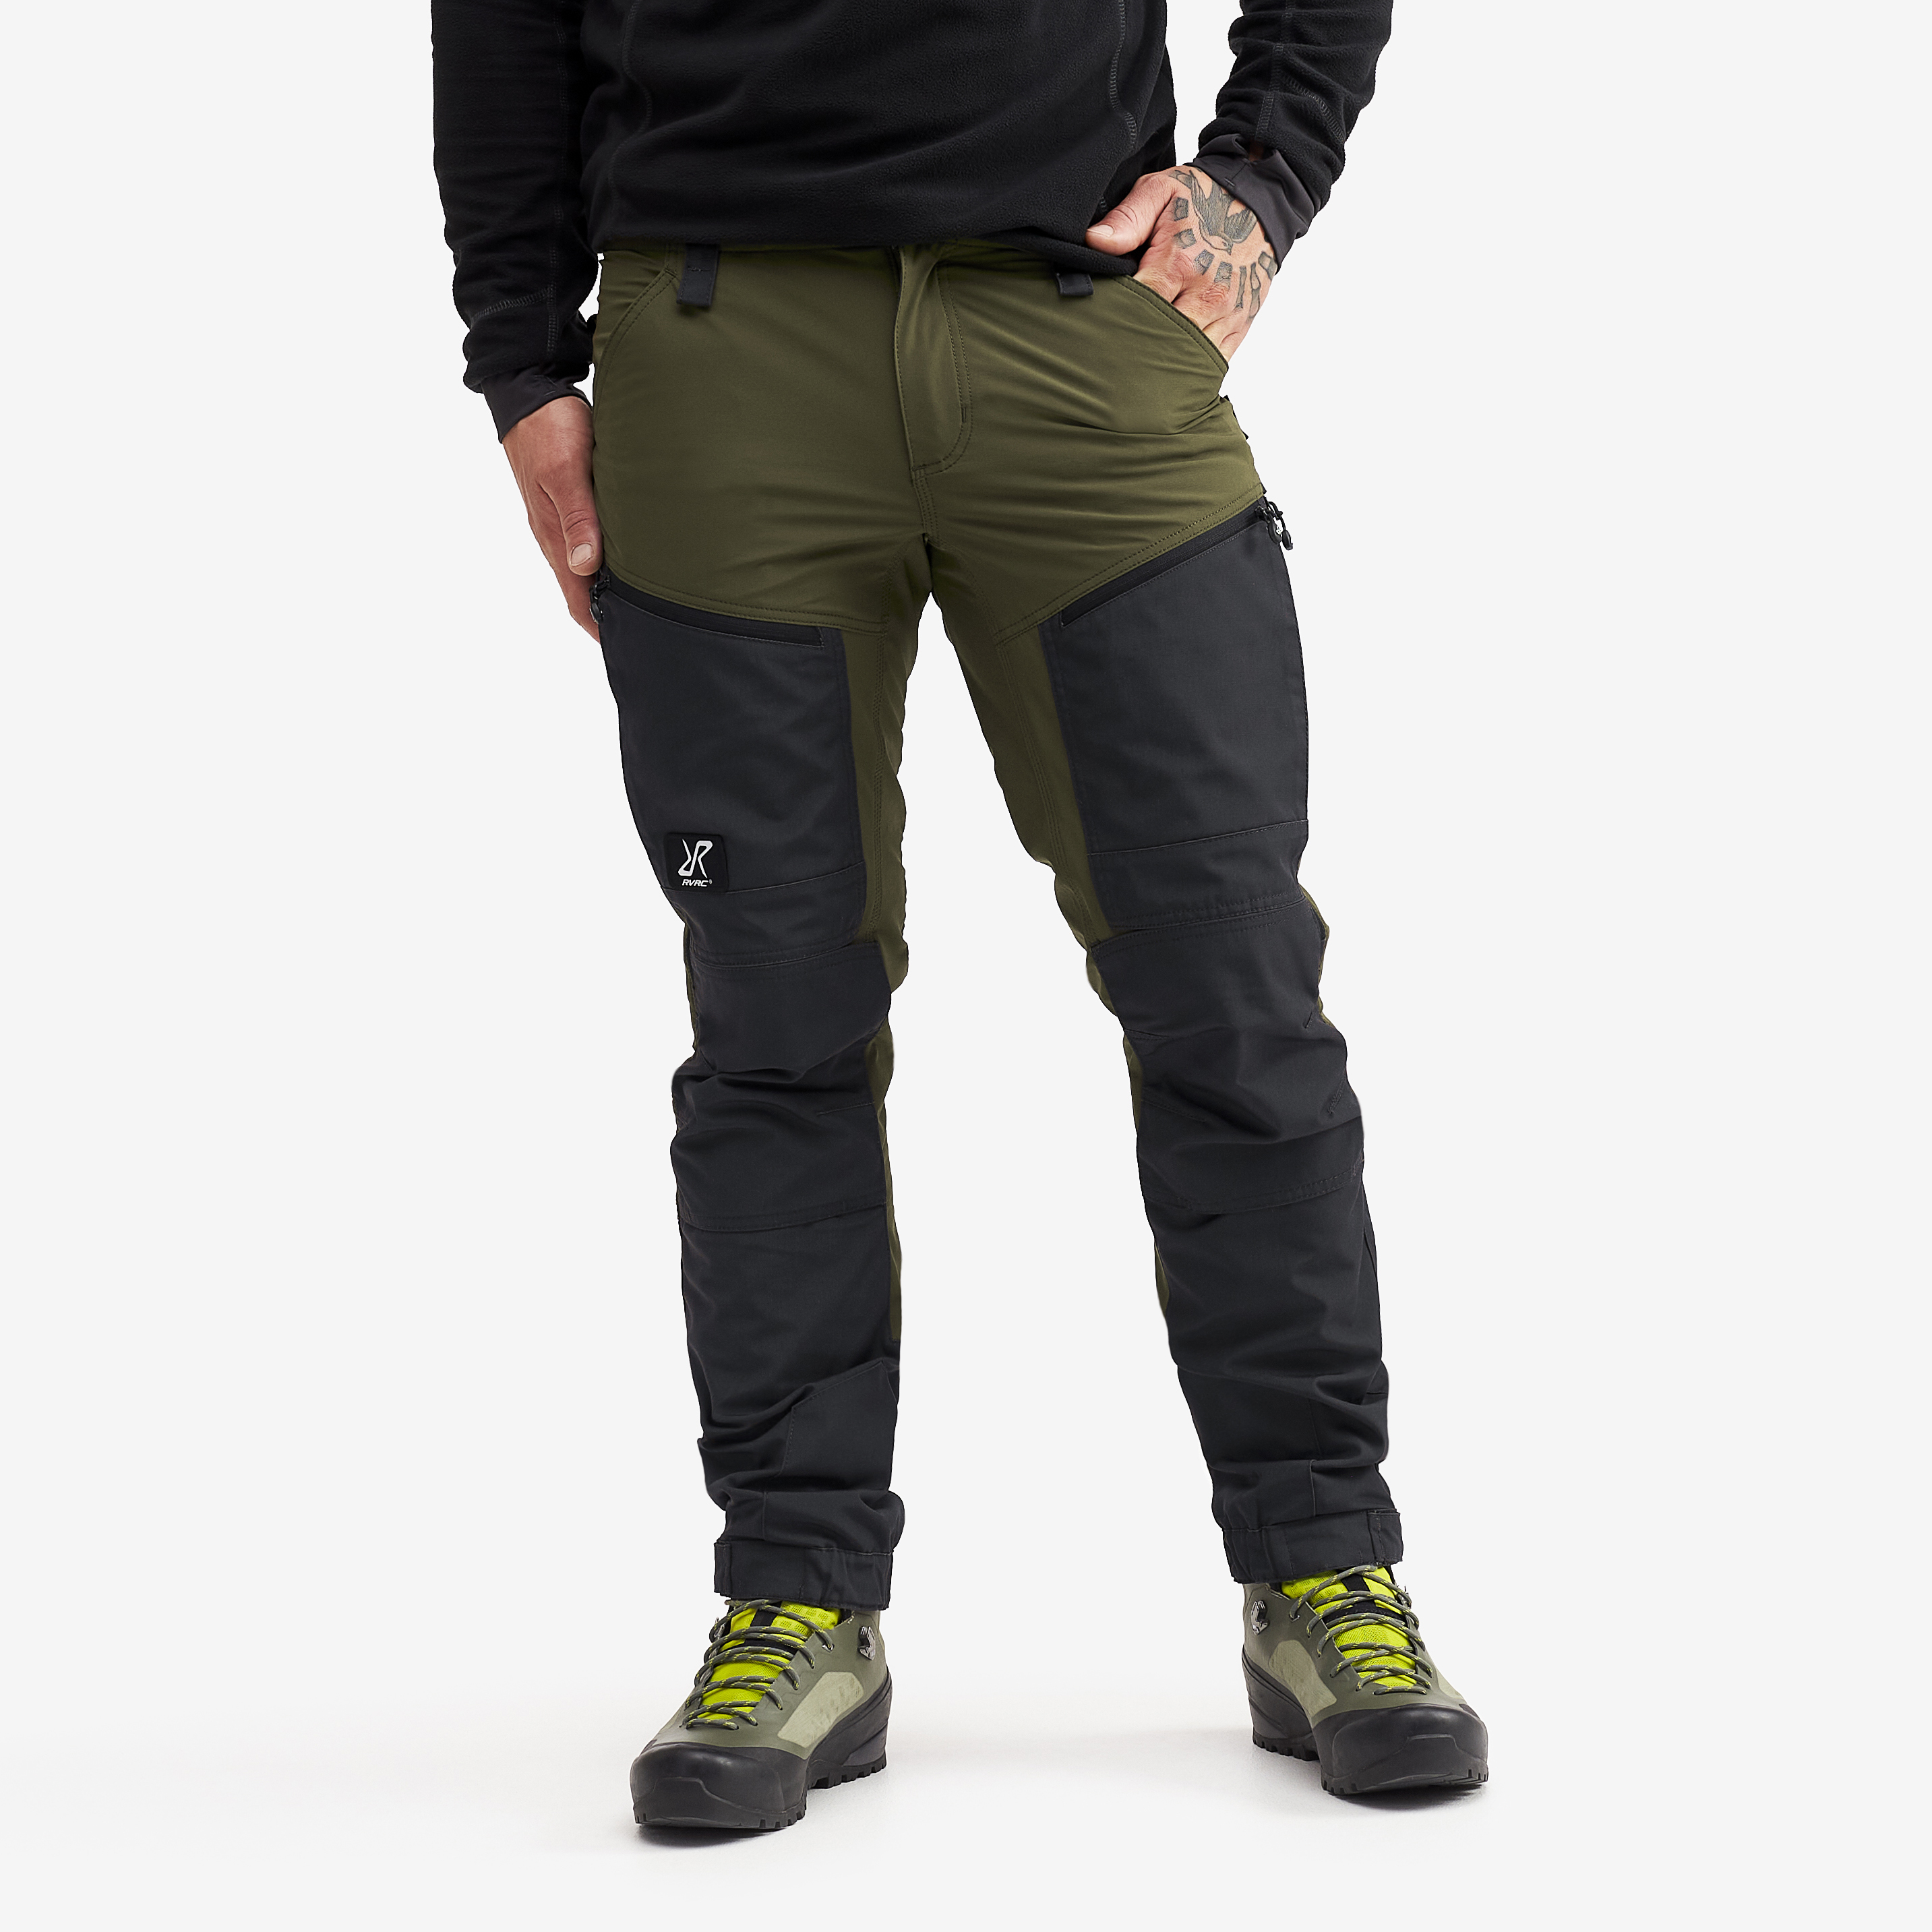 RVRC GP Pro Short hiking pants for men in green